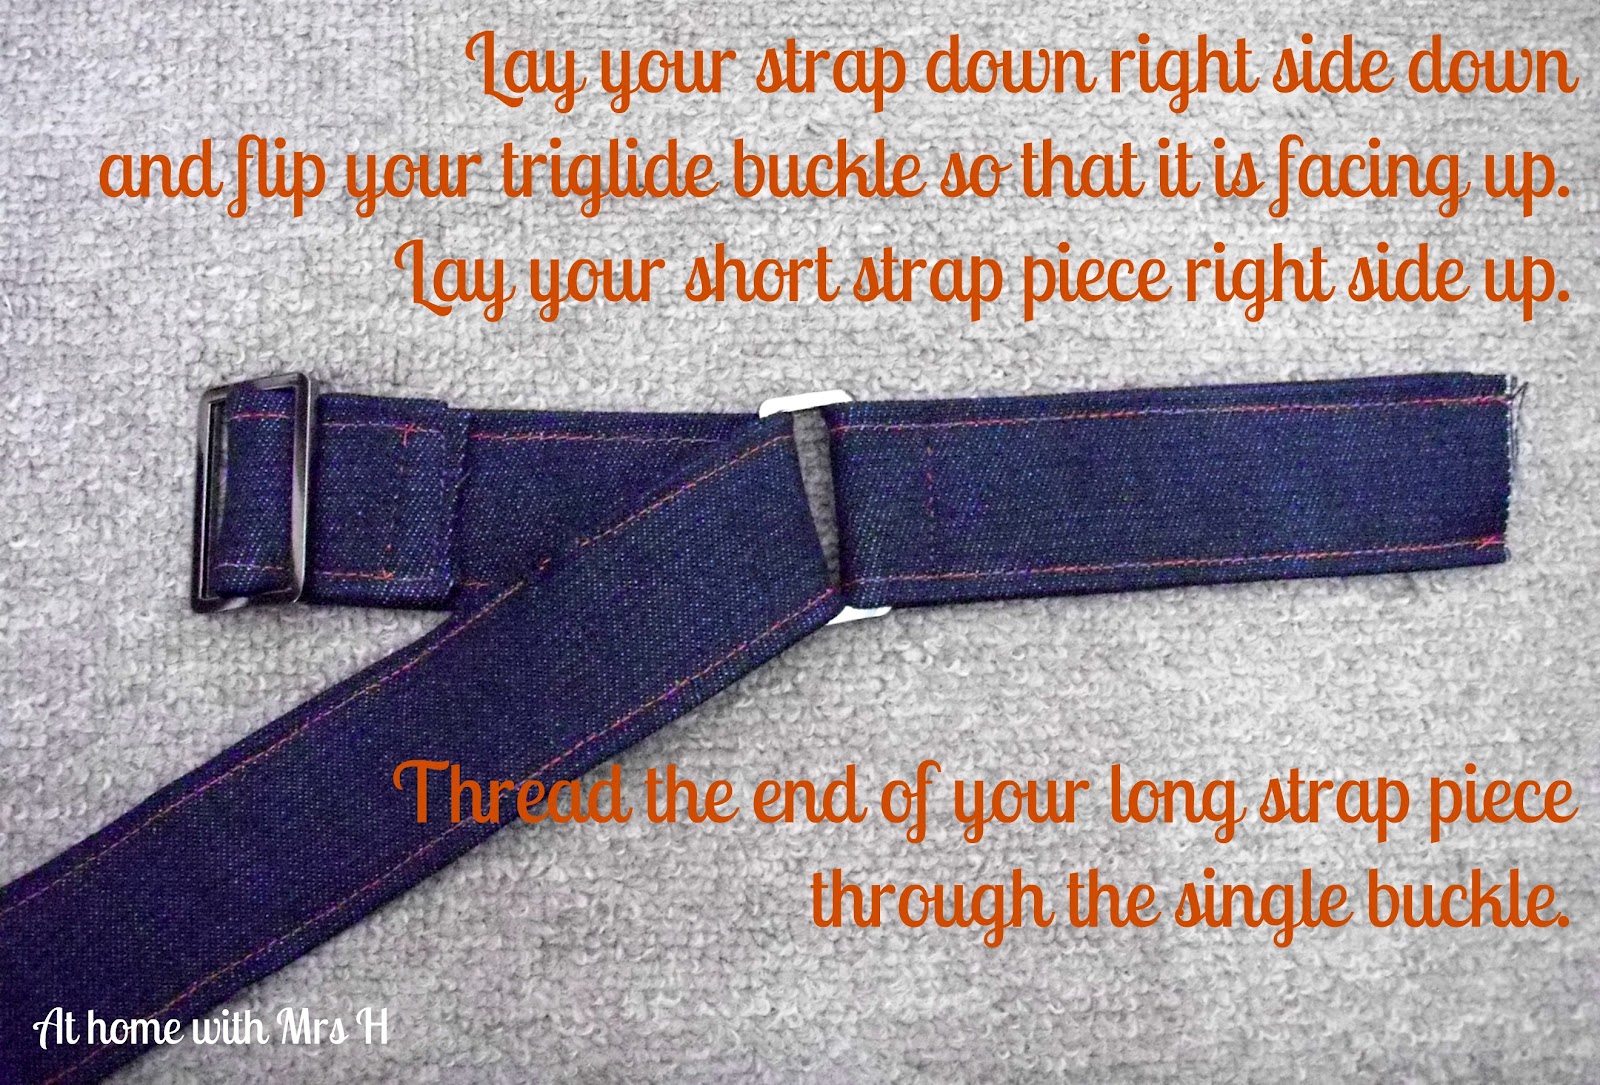 Mrs H - the blog: How to make an adjustable bag strap